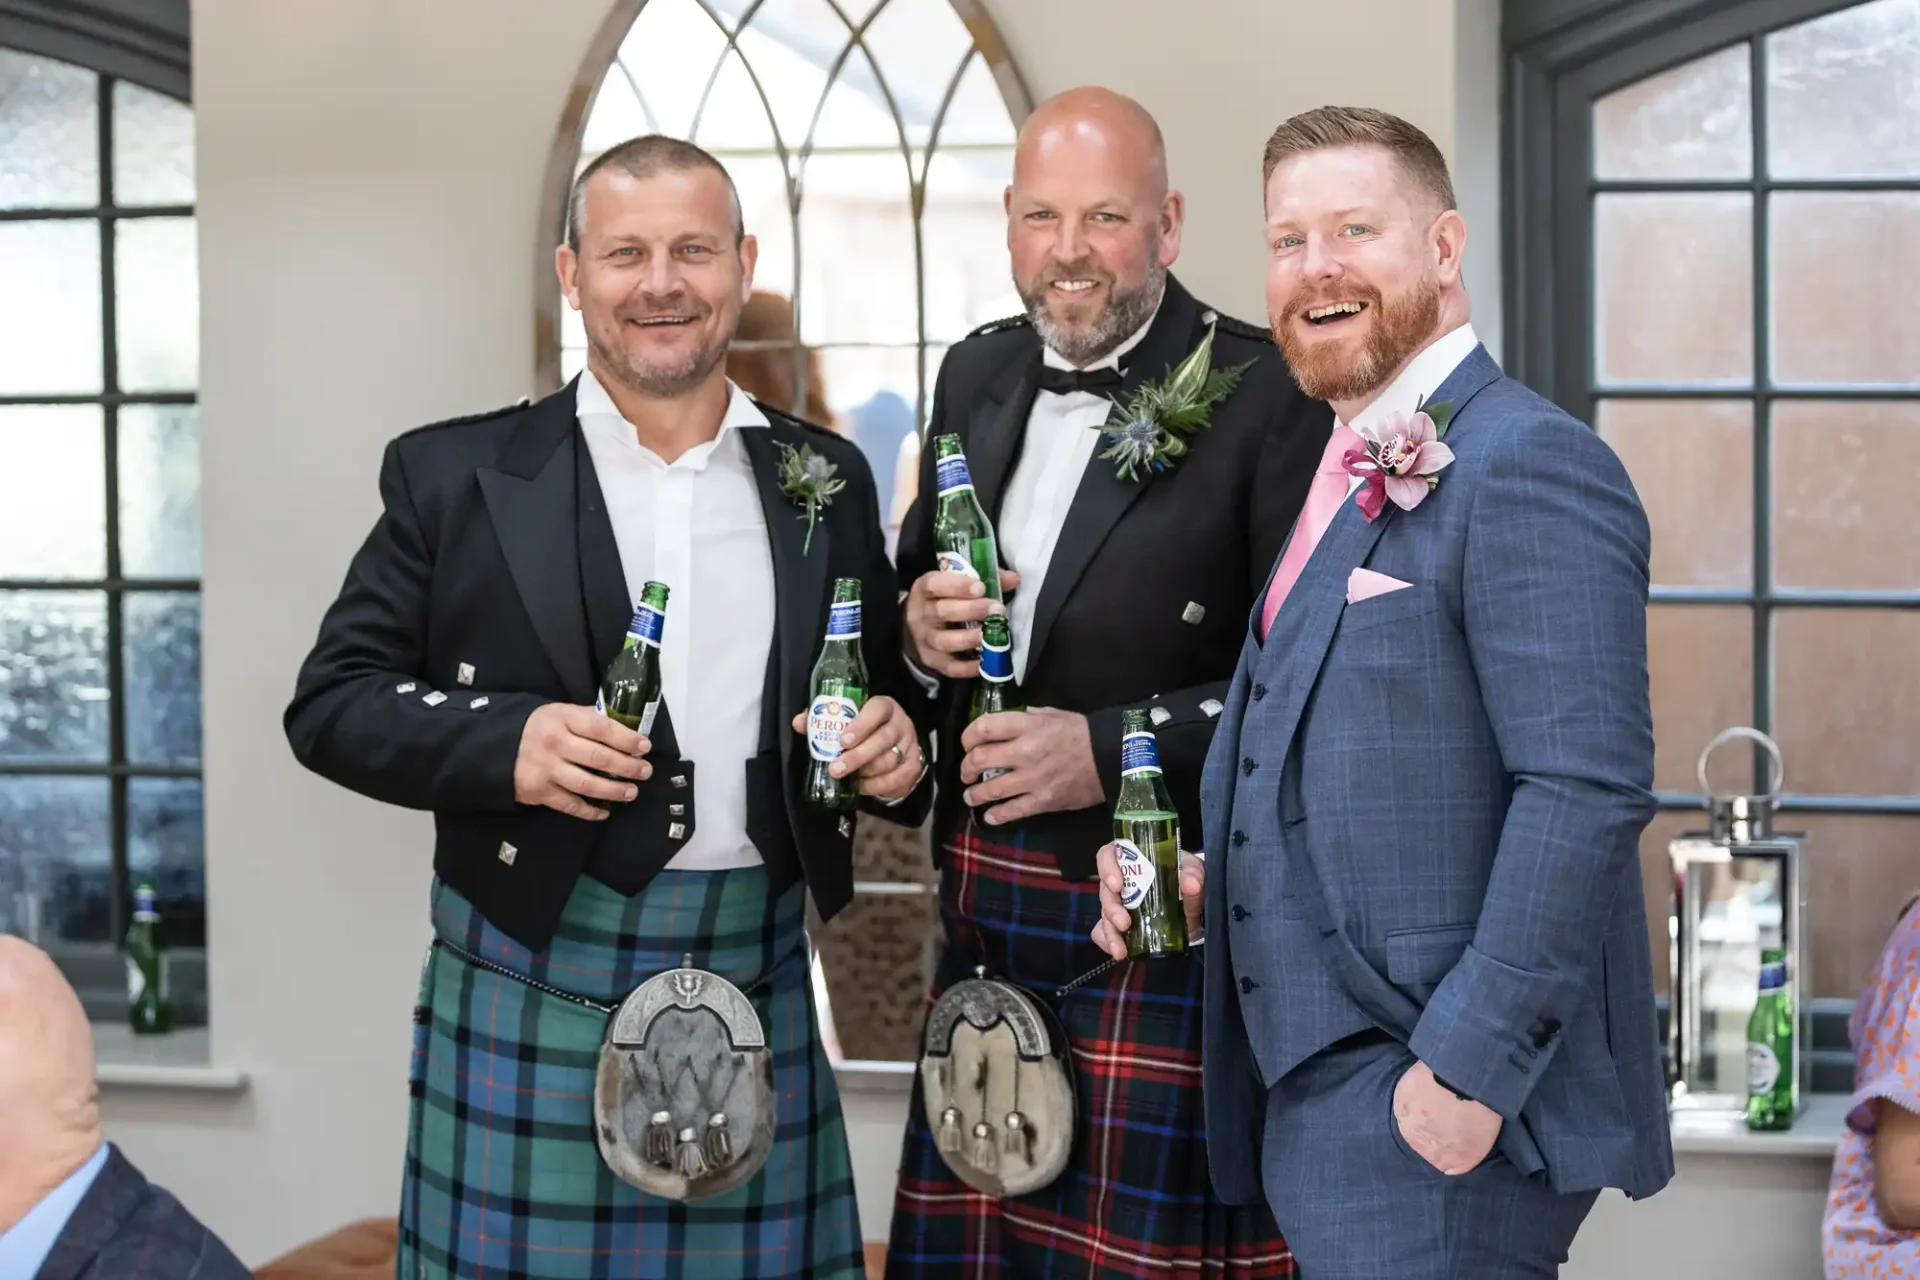 Three smiling men in formal attire with tartan kilts, holding beer bottles at a social event.